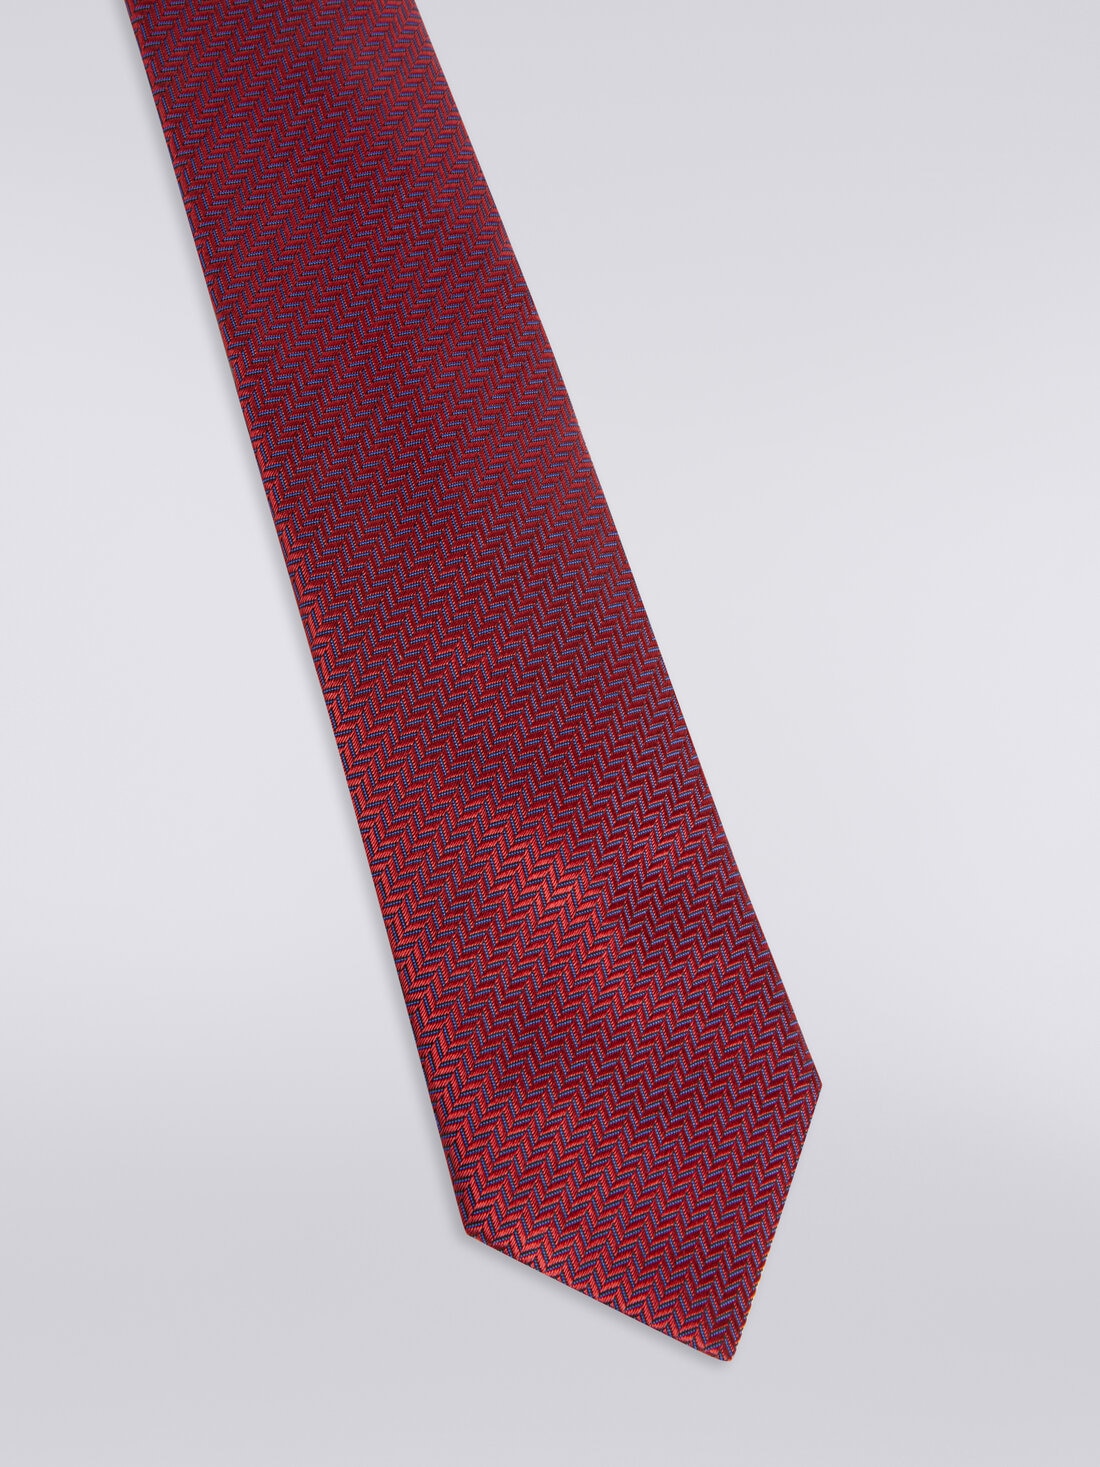 Silk tie, Multicoloured  - 8053147023335 - 1